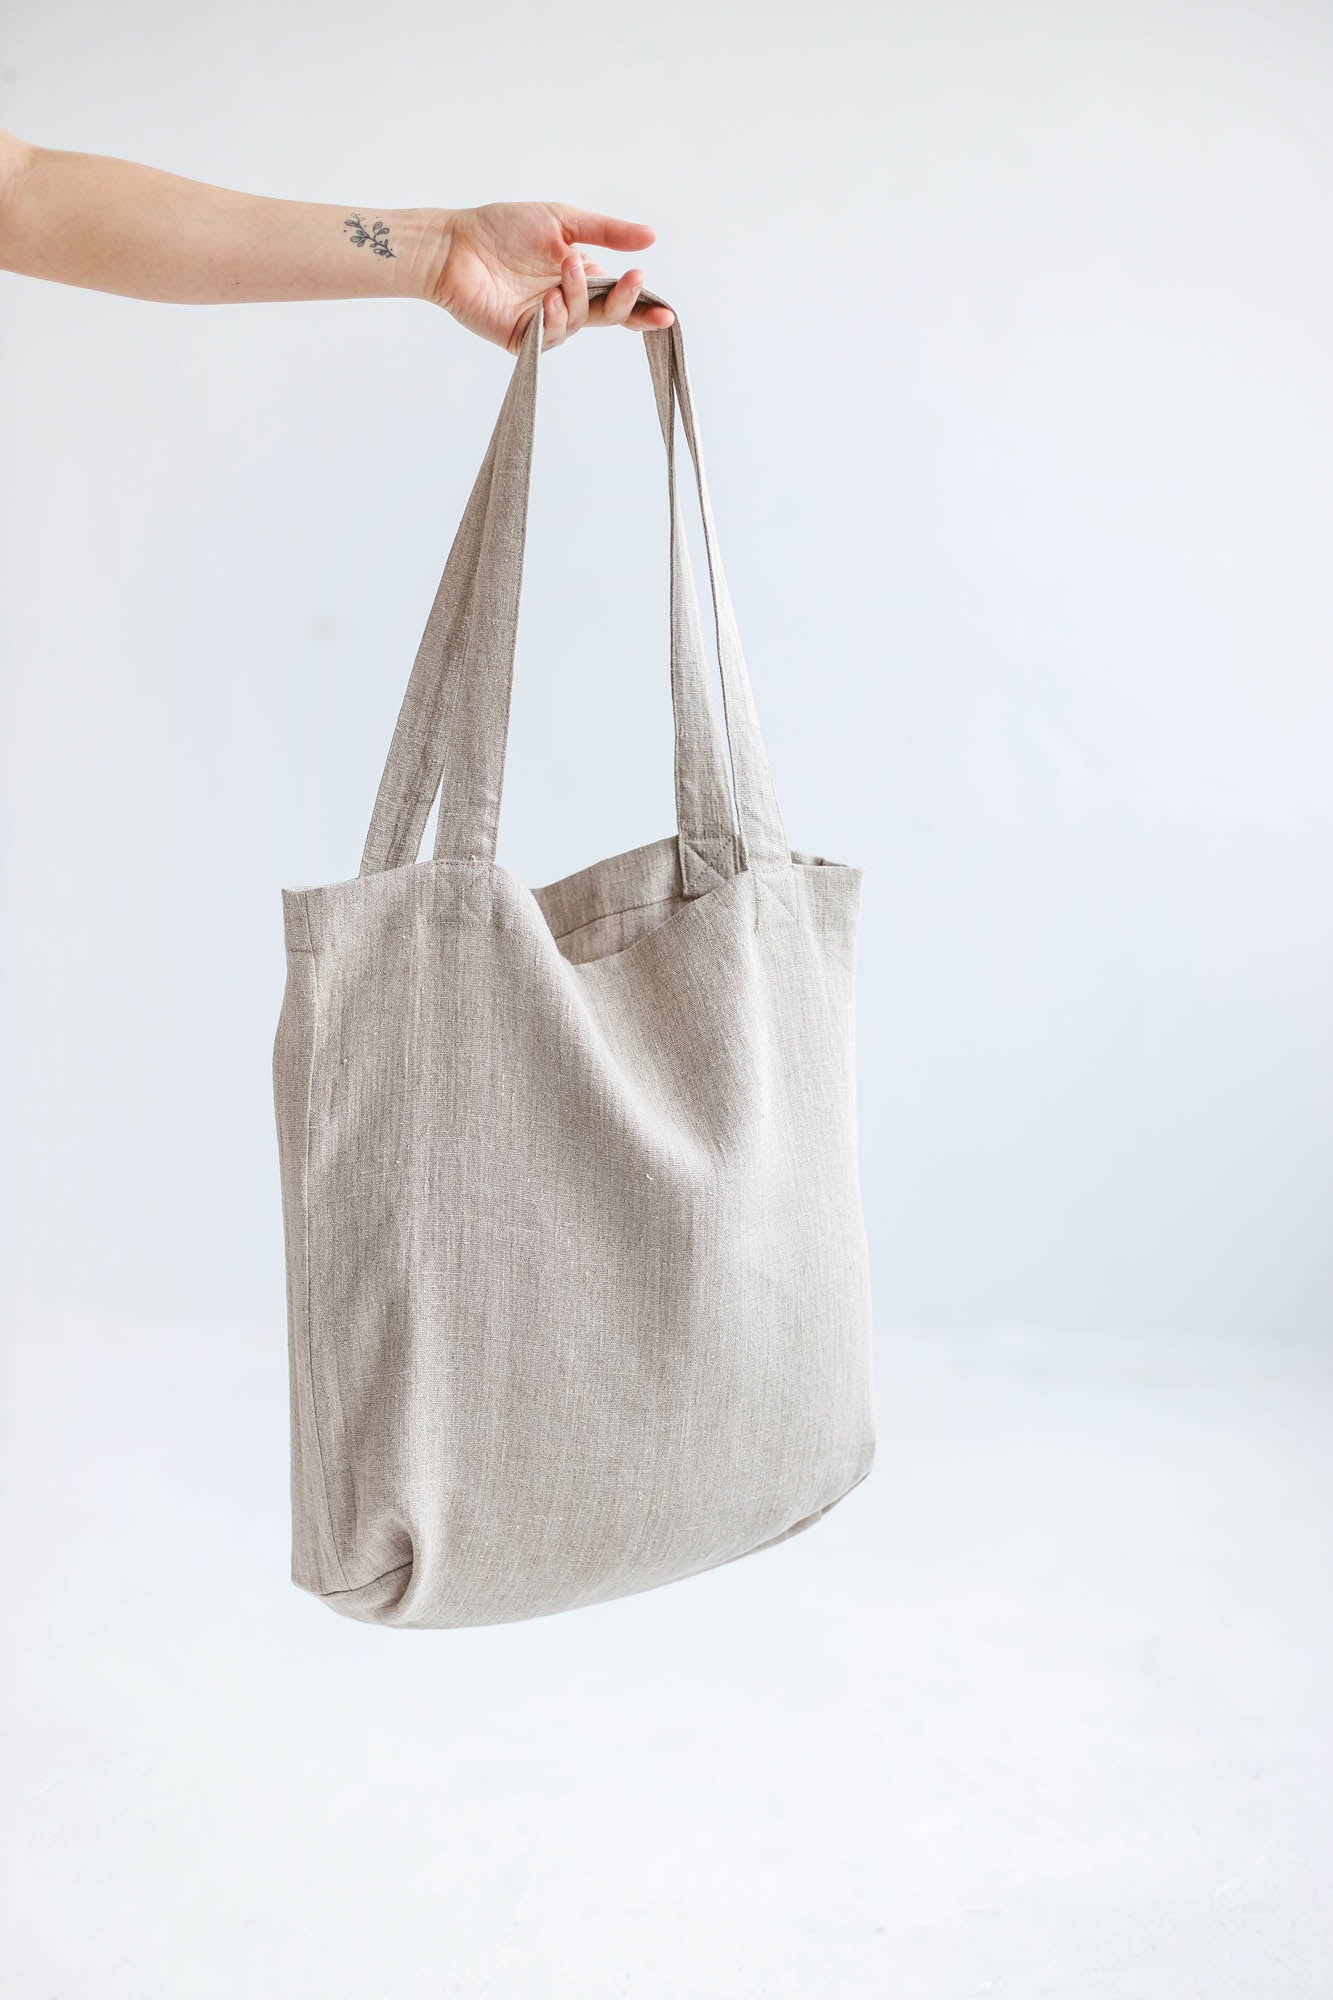 Natural linen tote bag